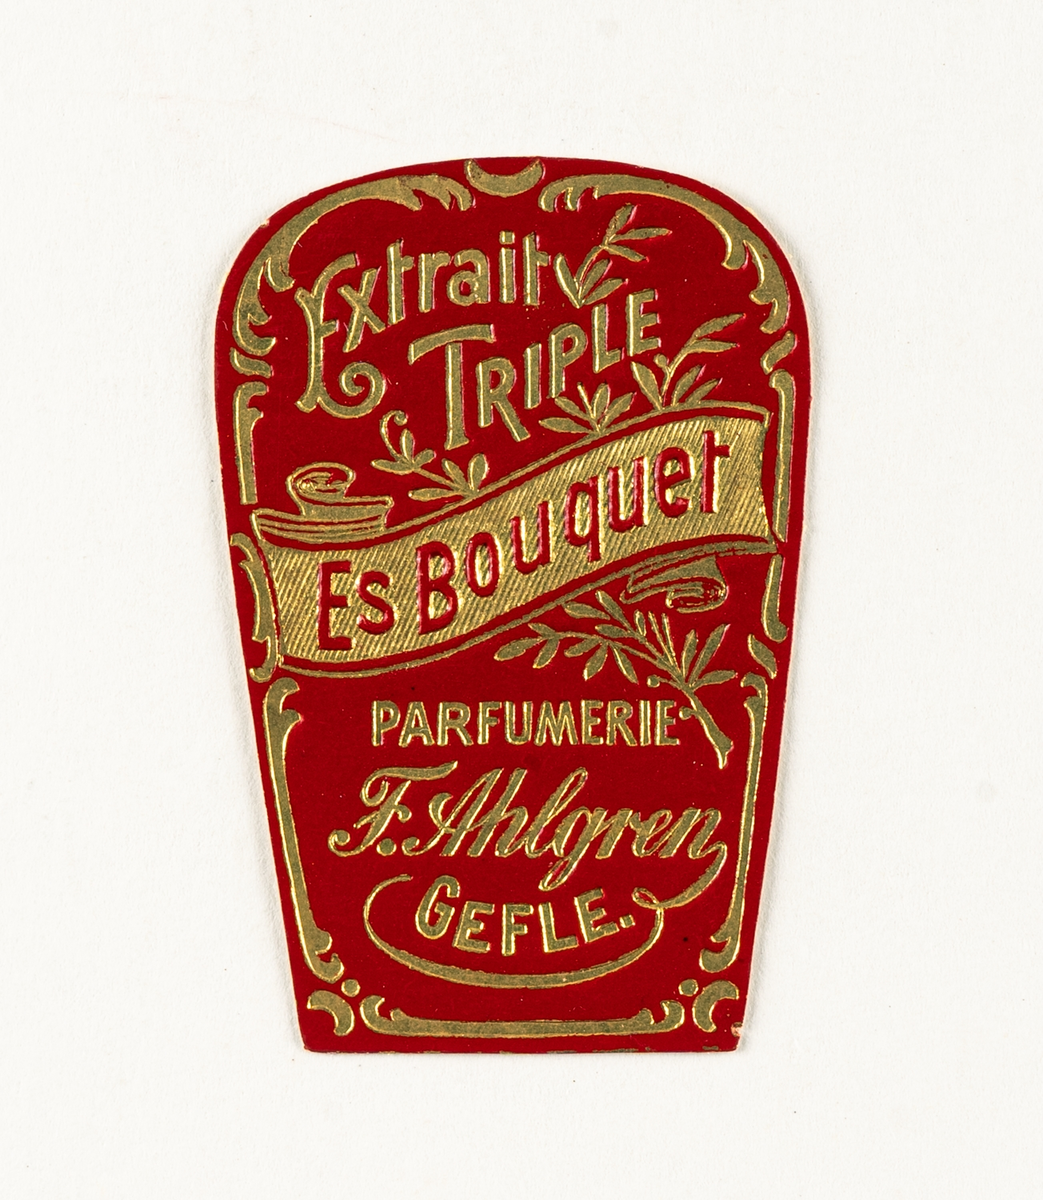 Etikett i papper med blomsterdekor i guld på röd botten med titeln Extrait Triple Es Bouquet Parfumerie F. Ahlgren Gefle.
